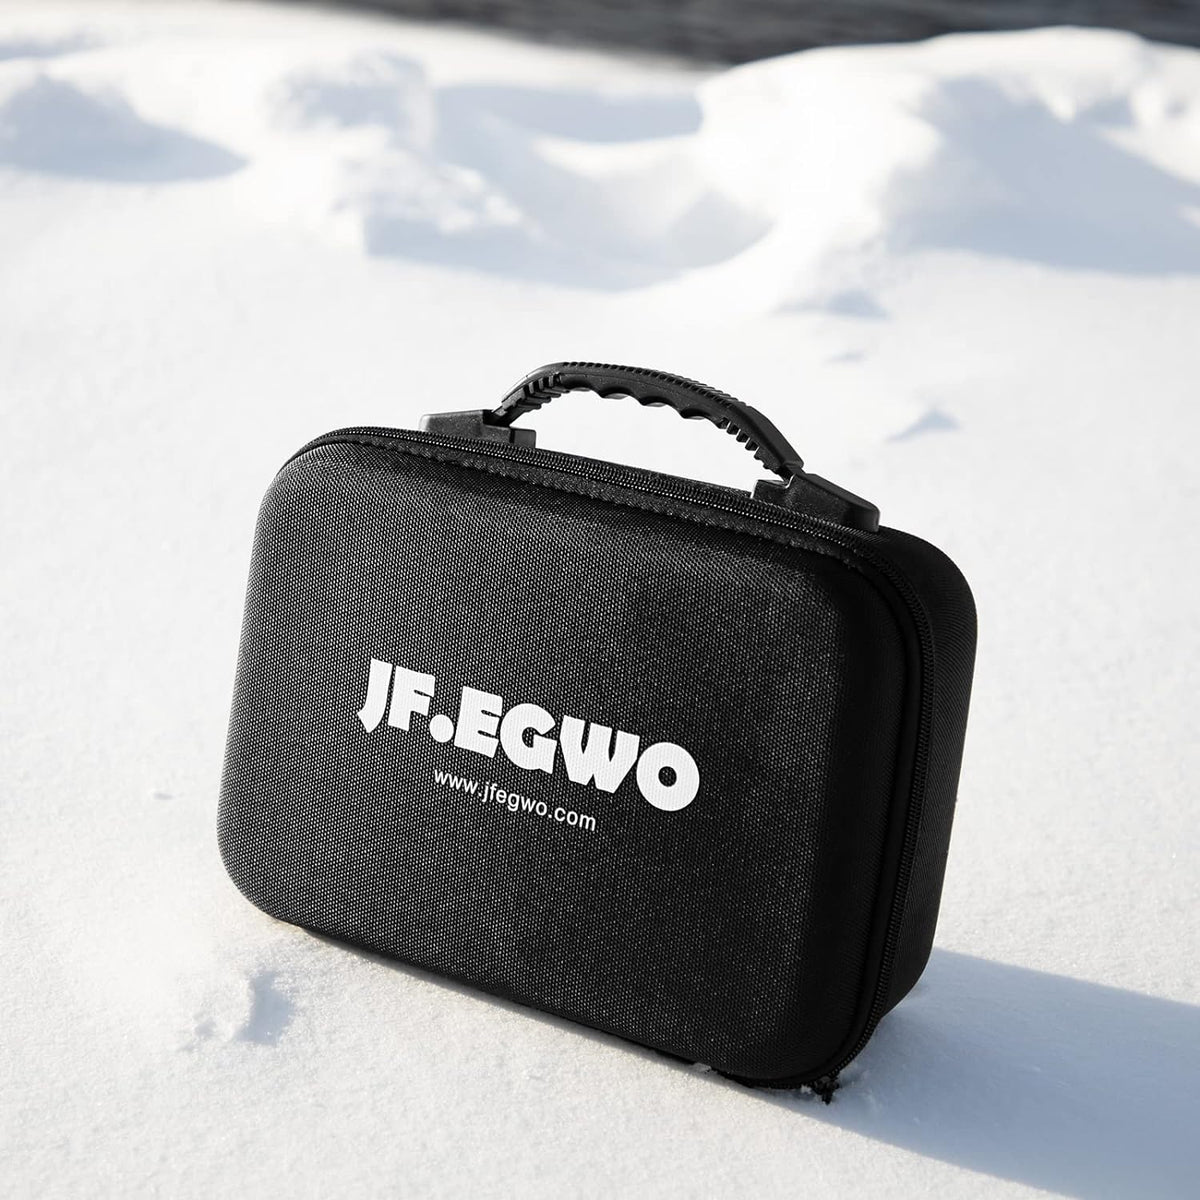 JF. egwo caja de almacenamiento duro portátil gadgets de coche bolsa de transporte para 4000a y 6000a litio Salto de arranque